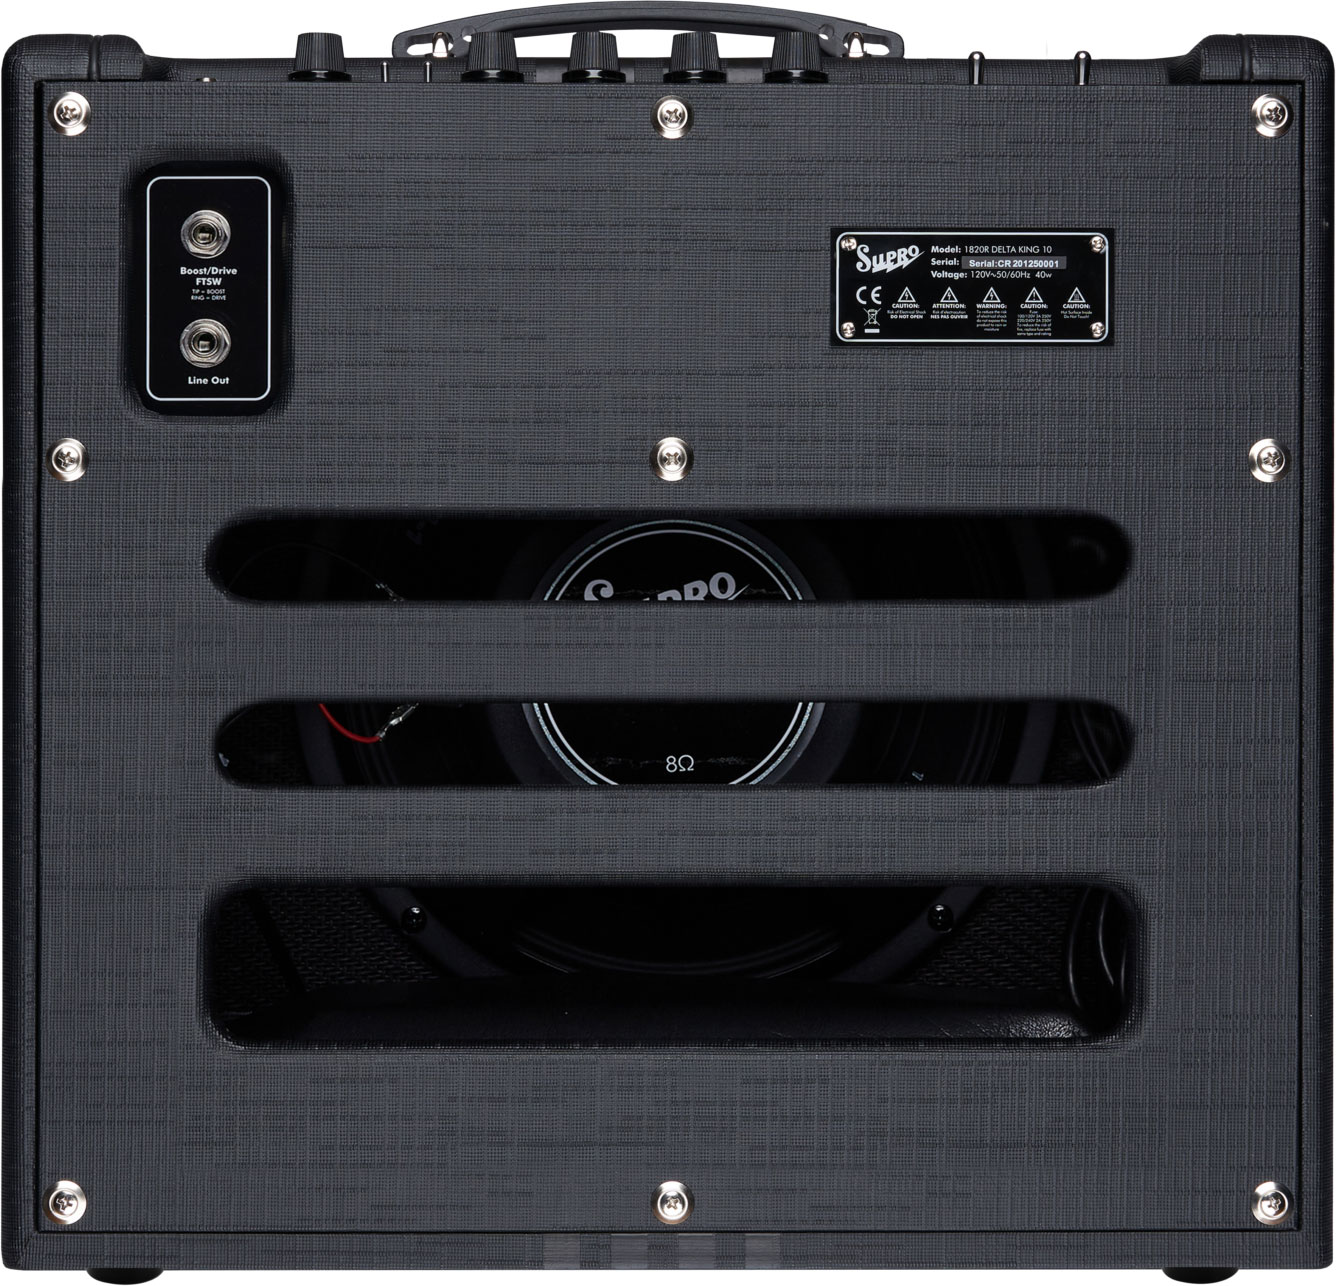 Supro Delta King 10 Combo 5w 1x10 Black/black - Combo amplificador para guitarra eléctrica - Variation 2